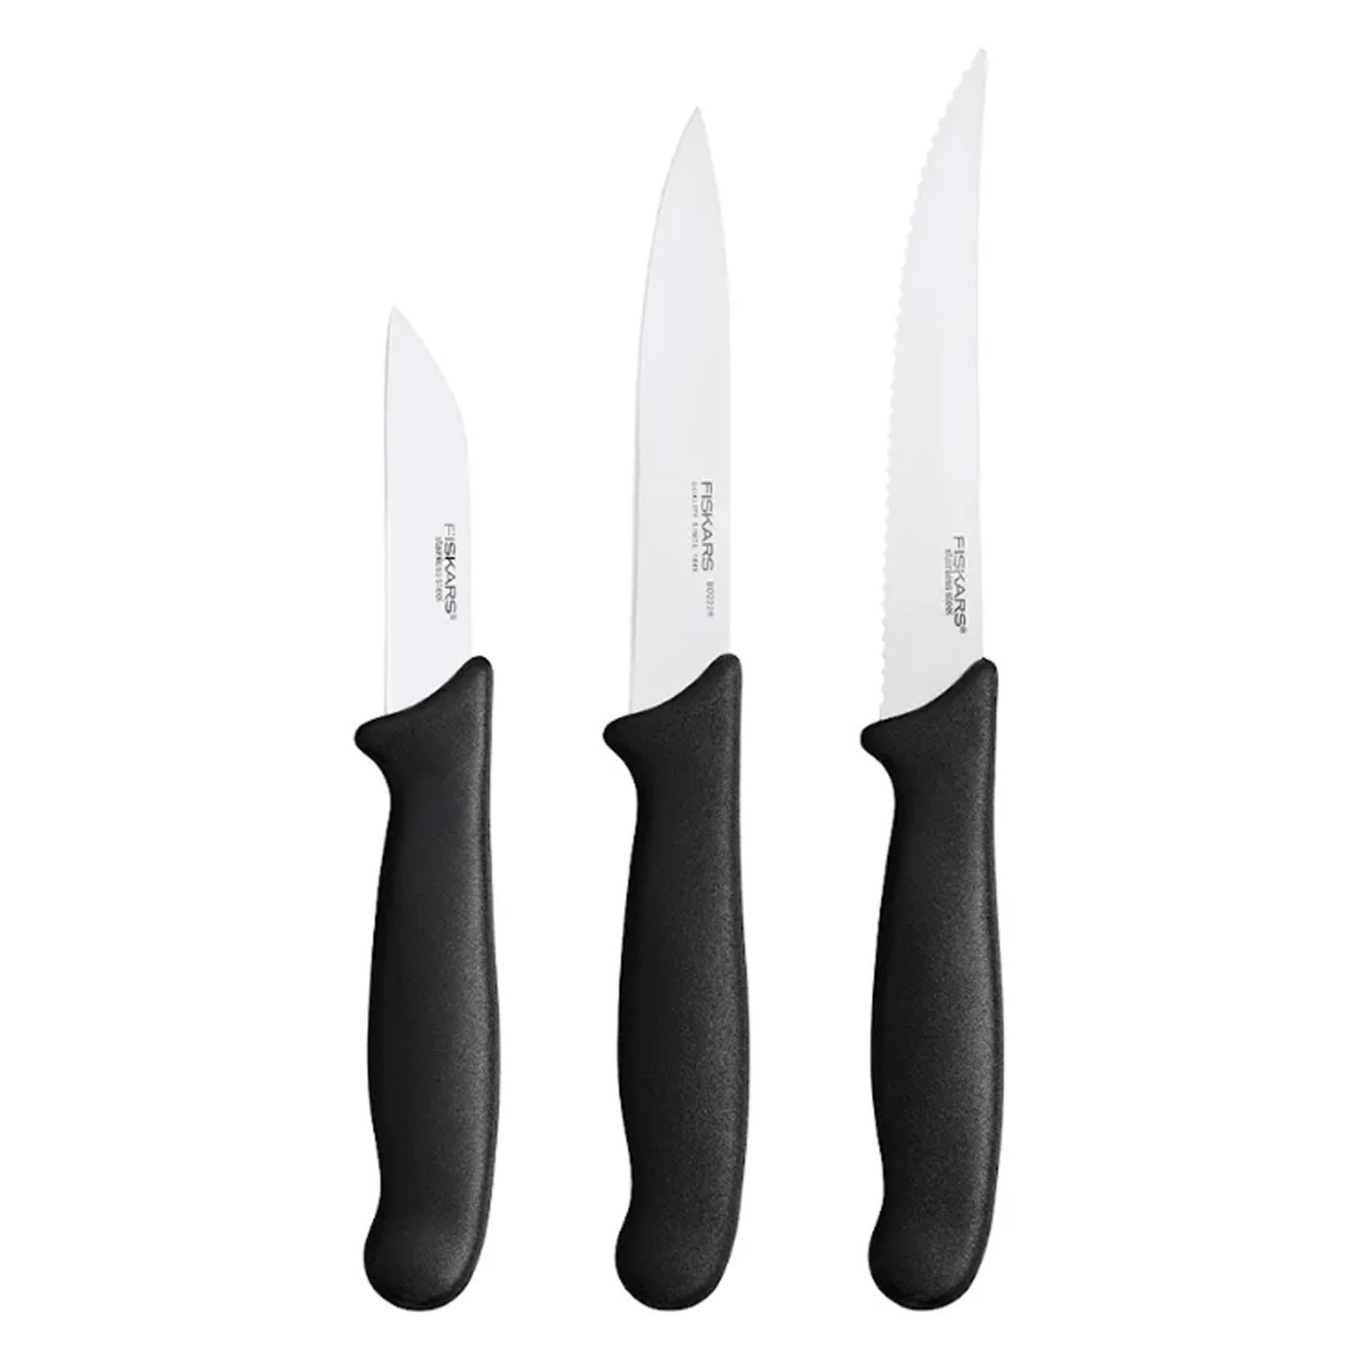 https://royaldesign.com/image/2/fiskars-essential-set-vegetable-knives-3-pieces-0?w=800&quality=80